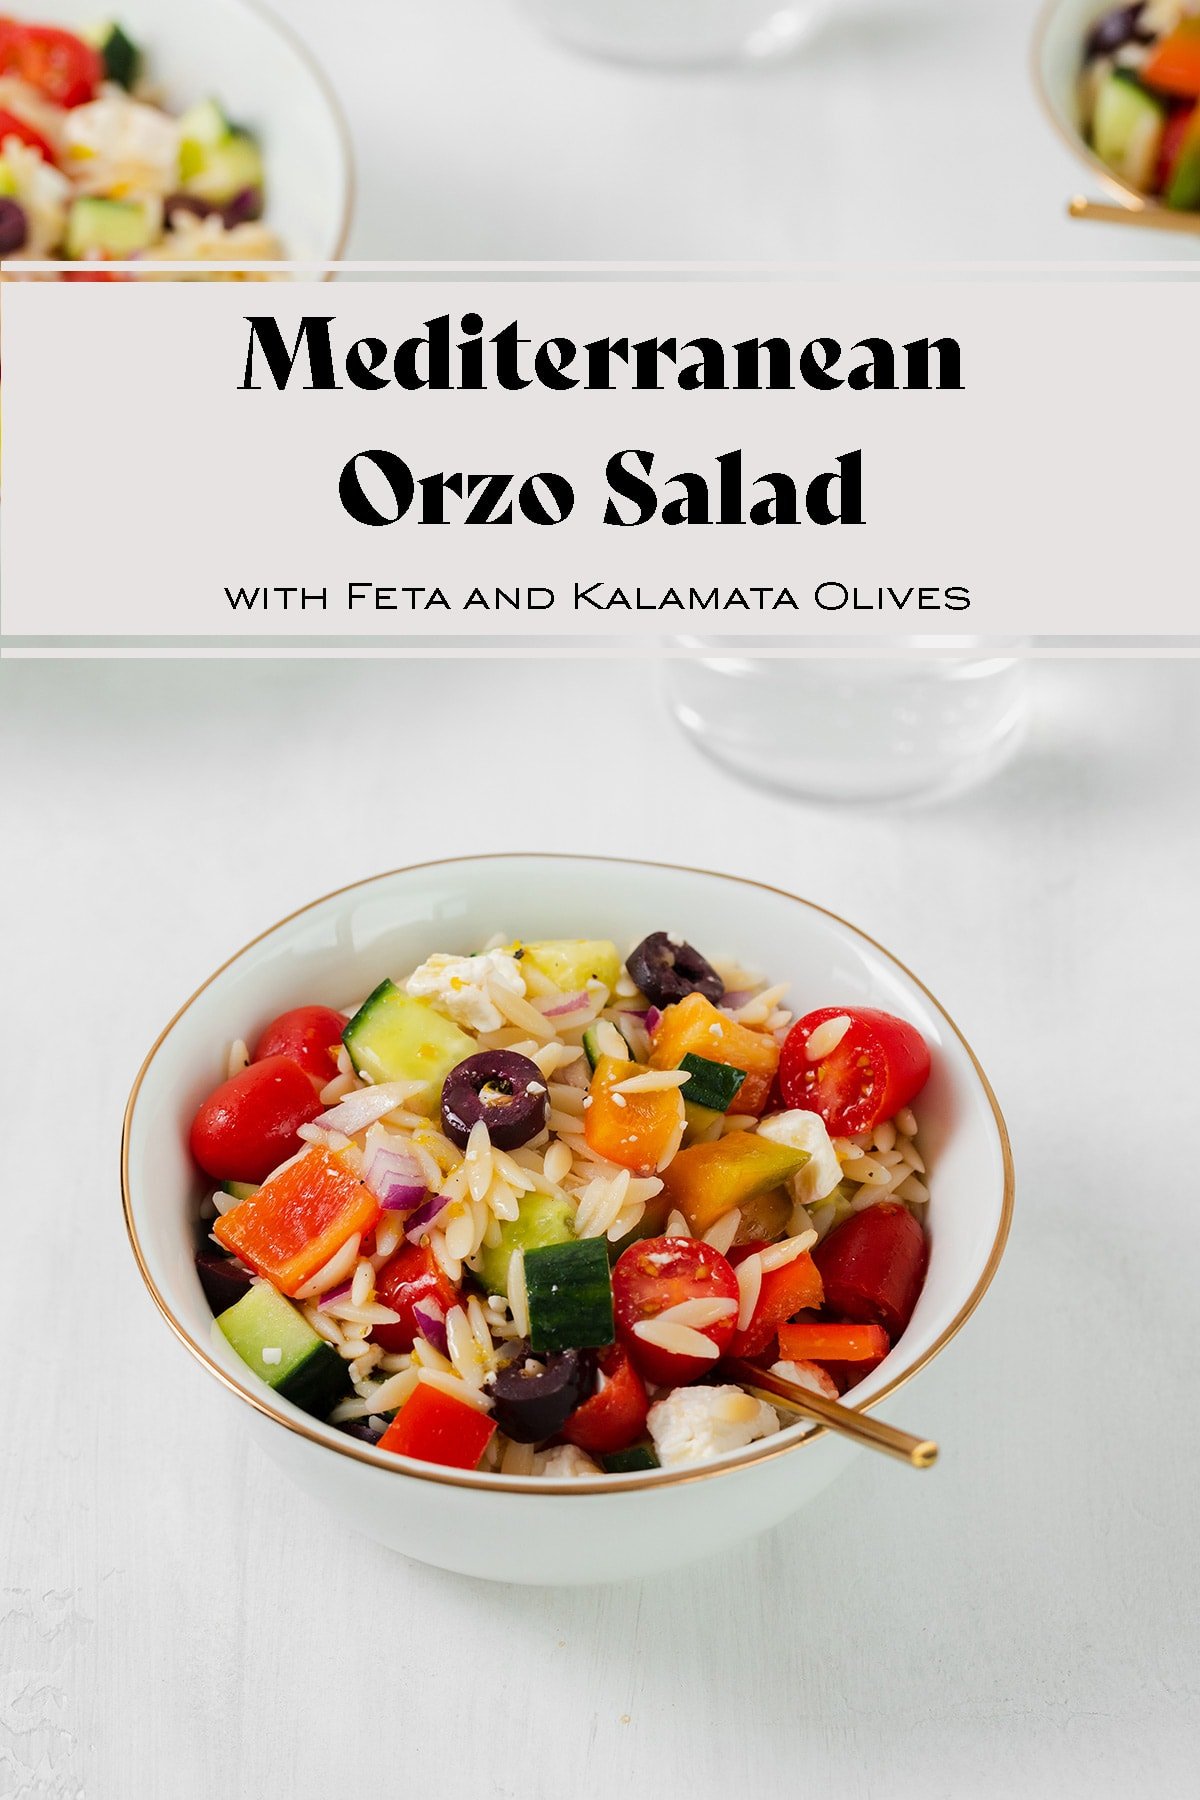 Mediterranean Orzo Salad with Lemon Vinaigrette